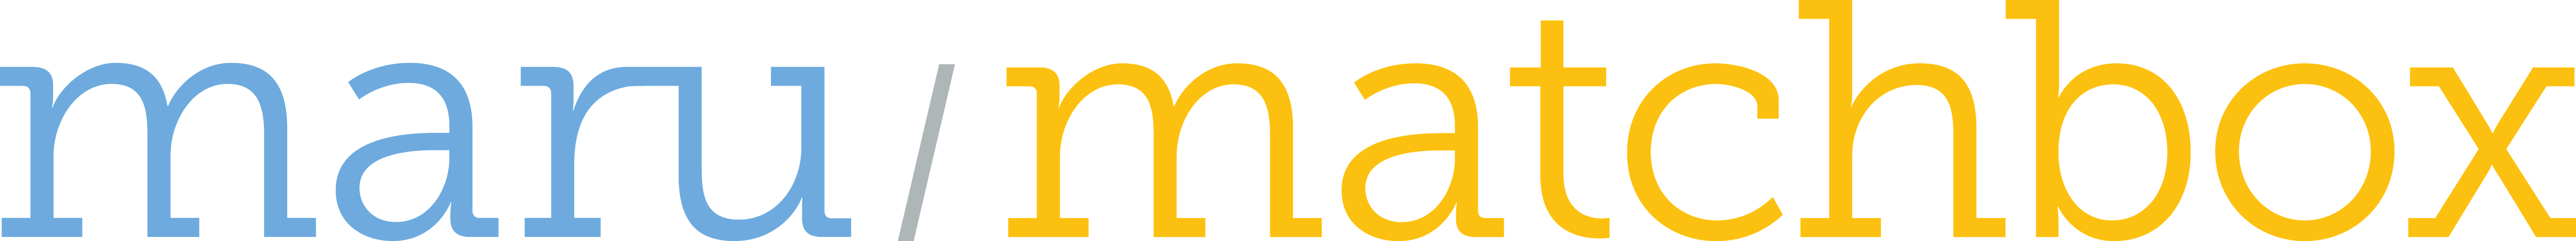 Maru/Matchbox logo